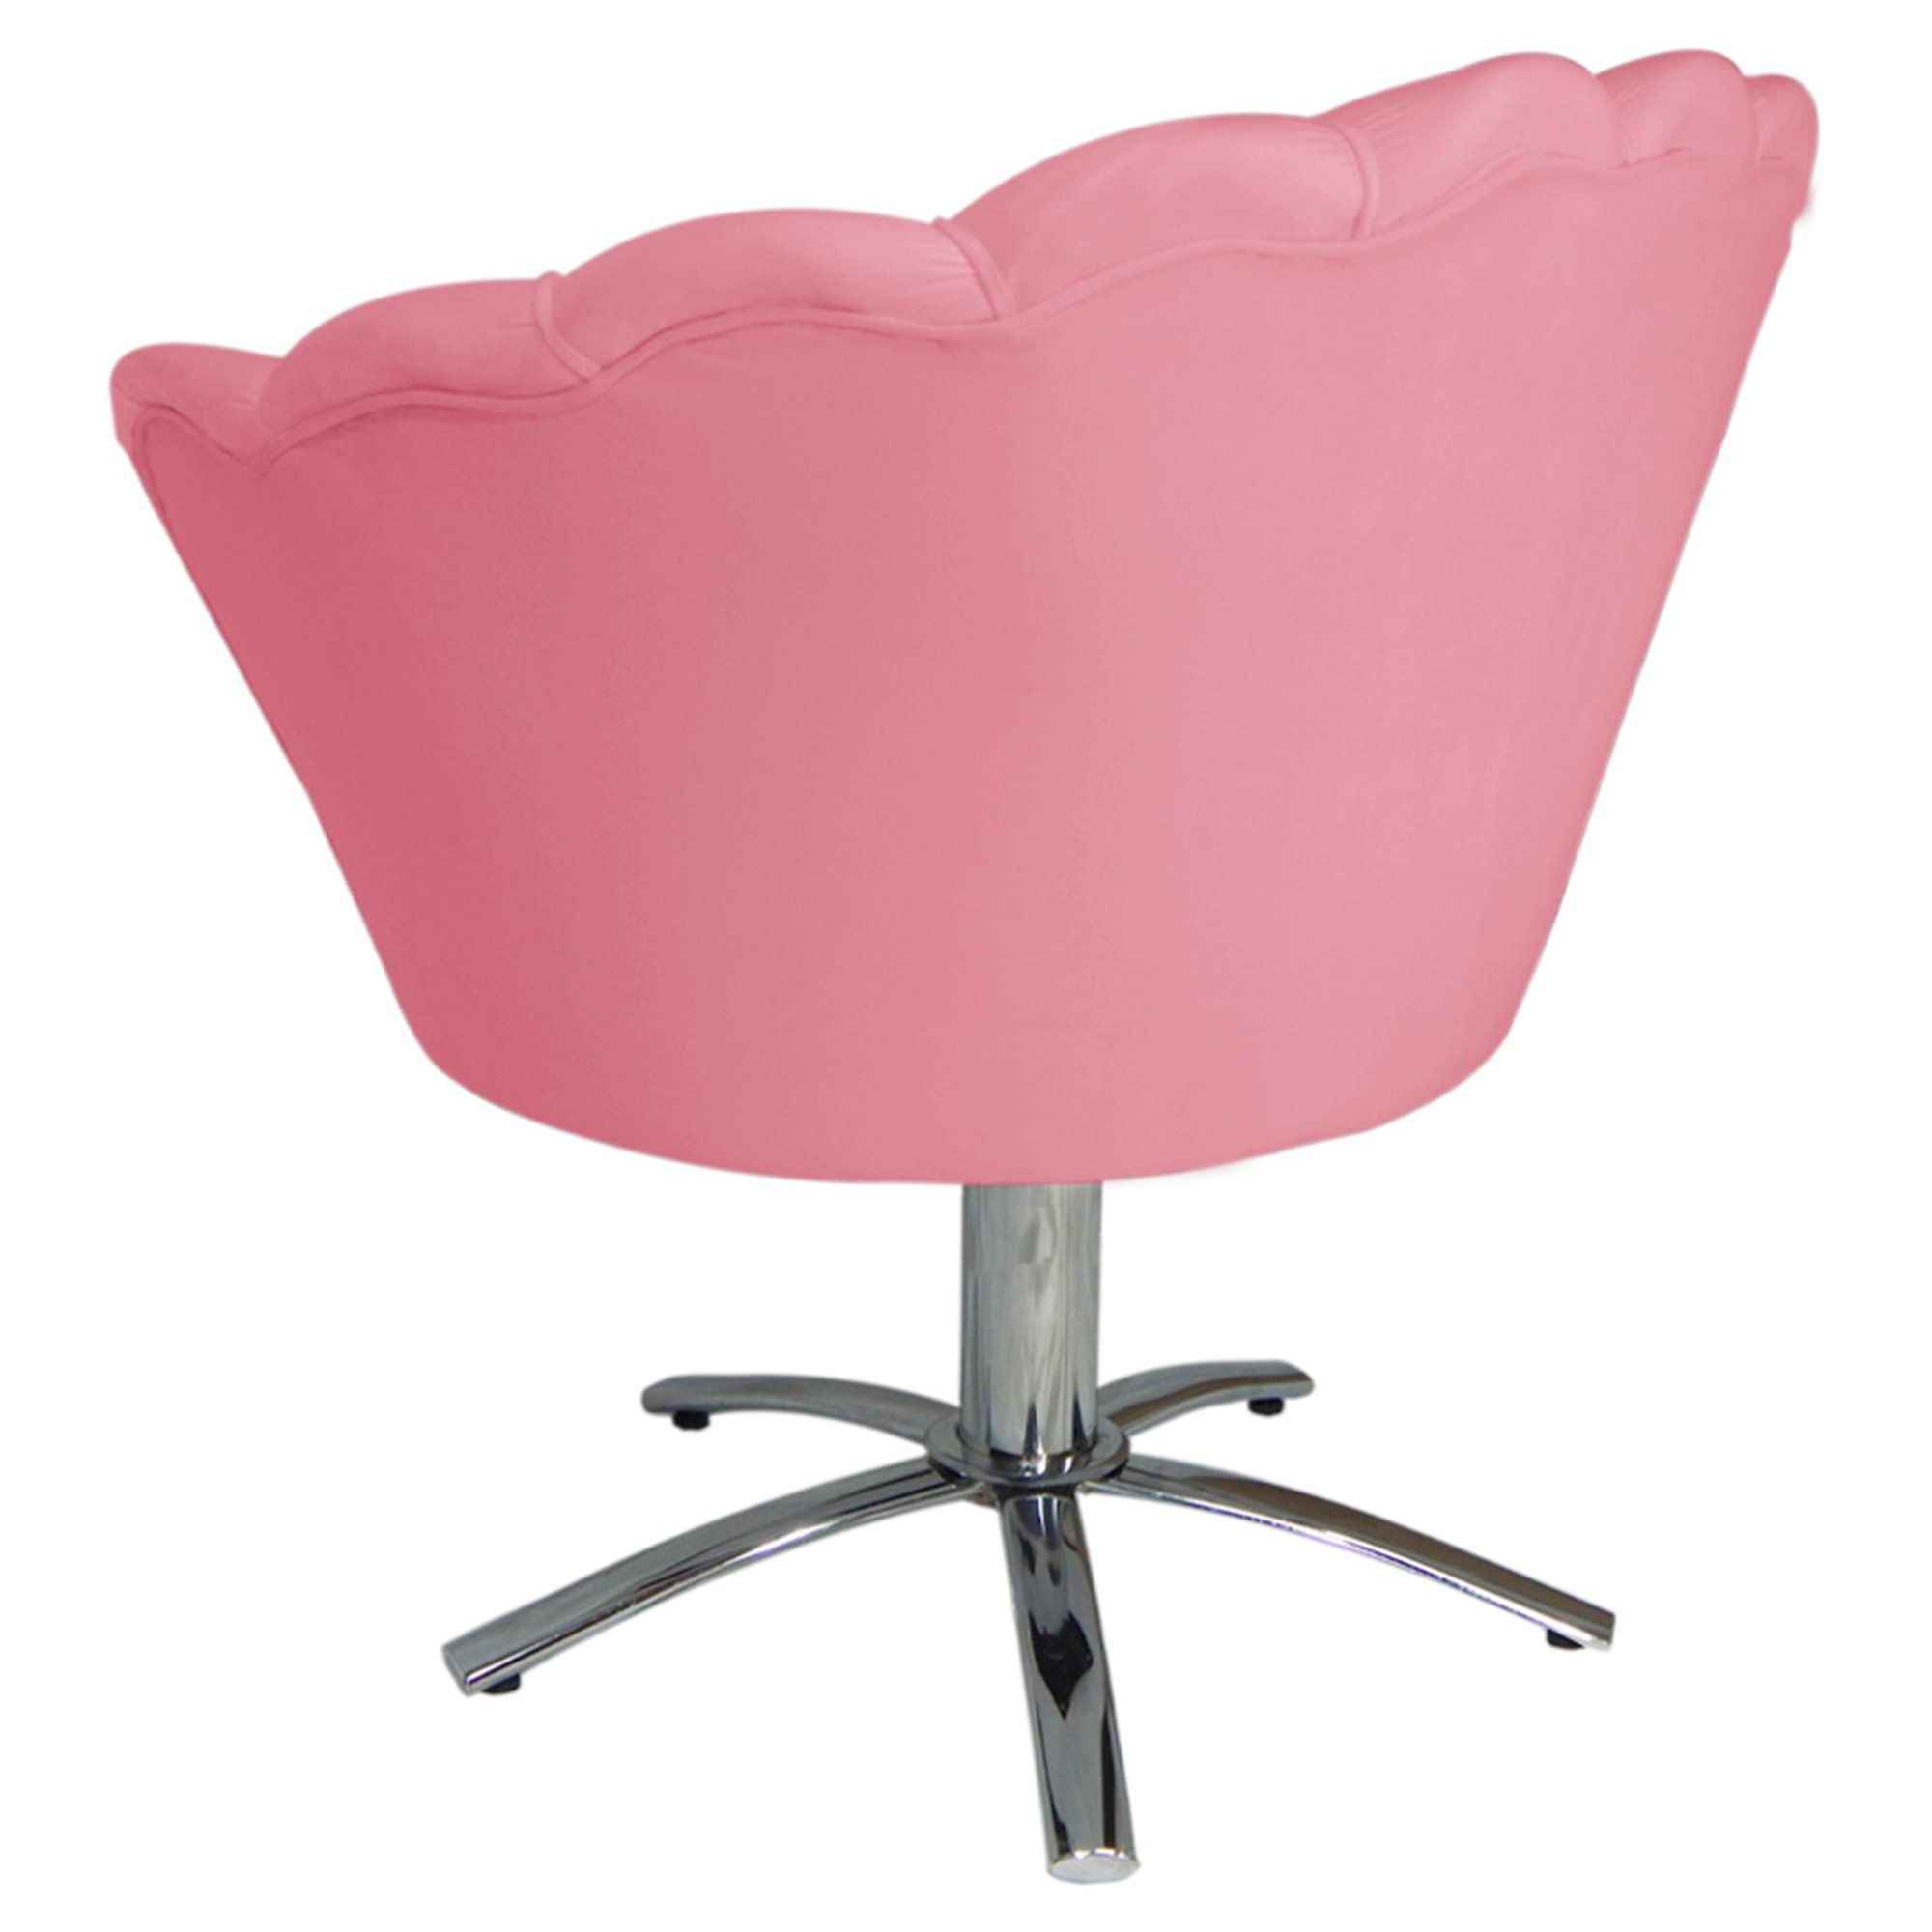 Poltrona Cadeira com Base Giratoria Cromado Pétala Suede Rosa - 3